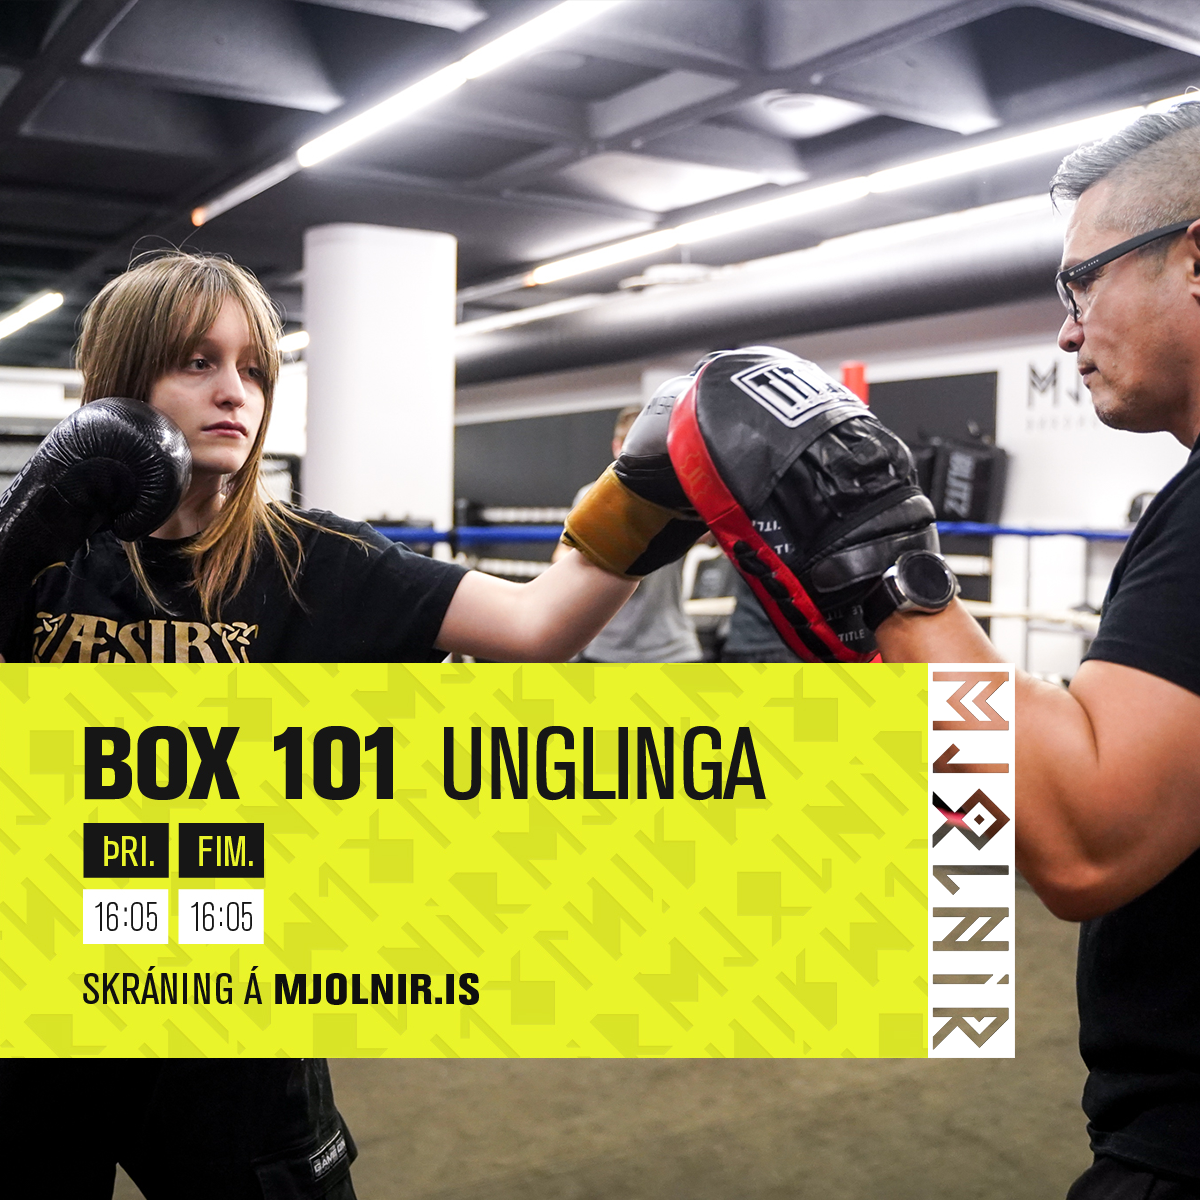 Box 101 unglinga